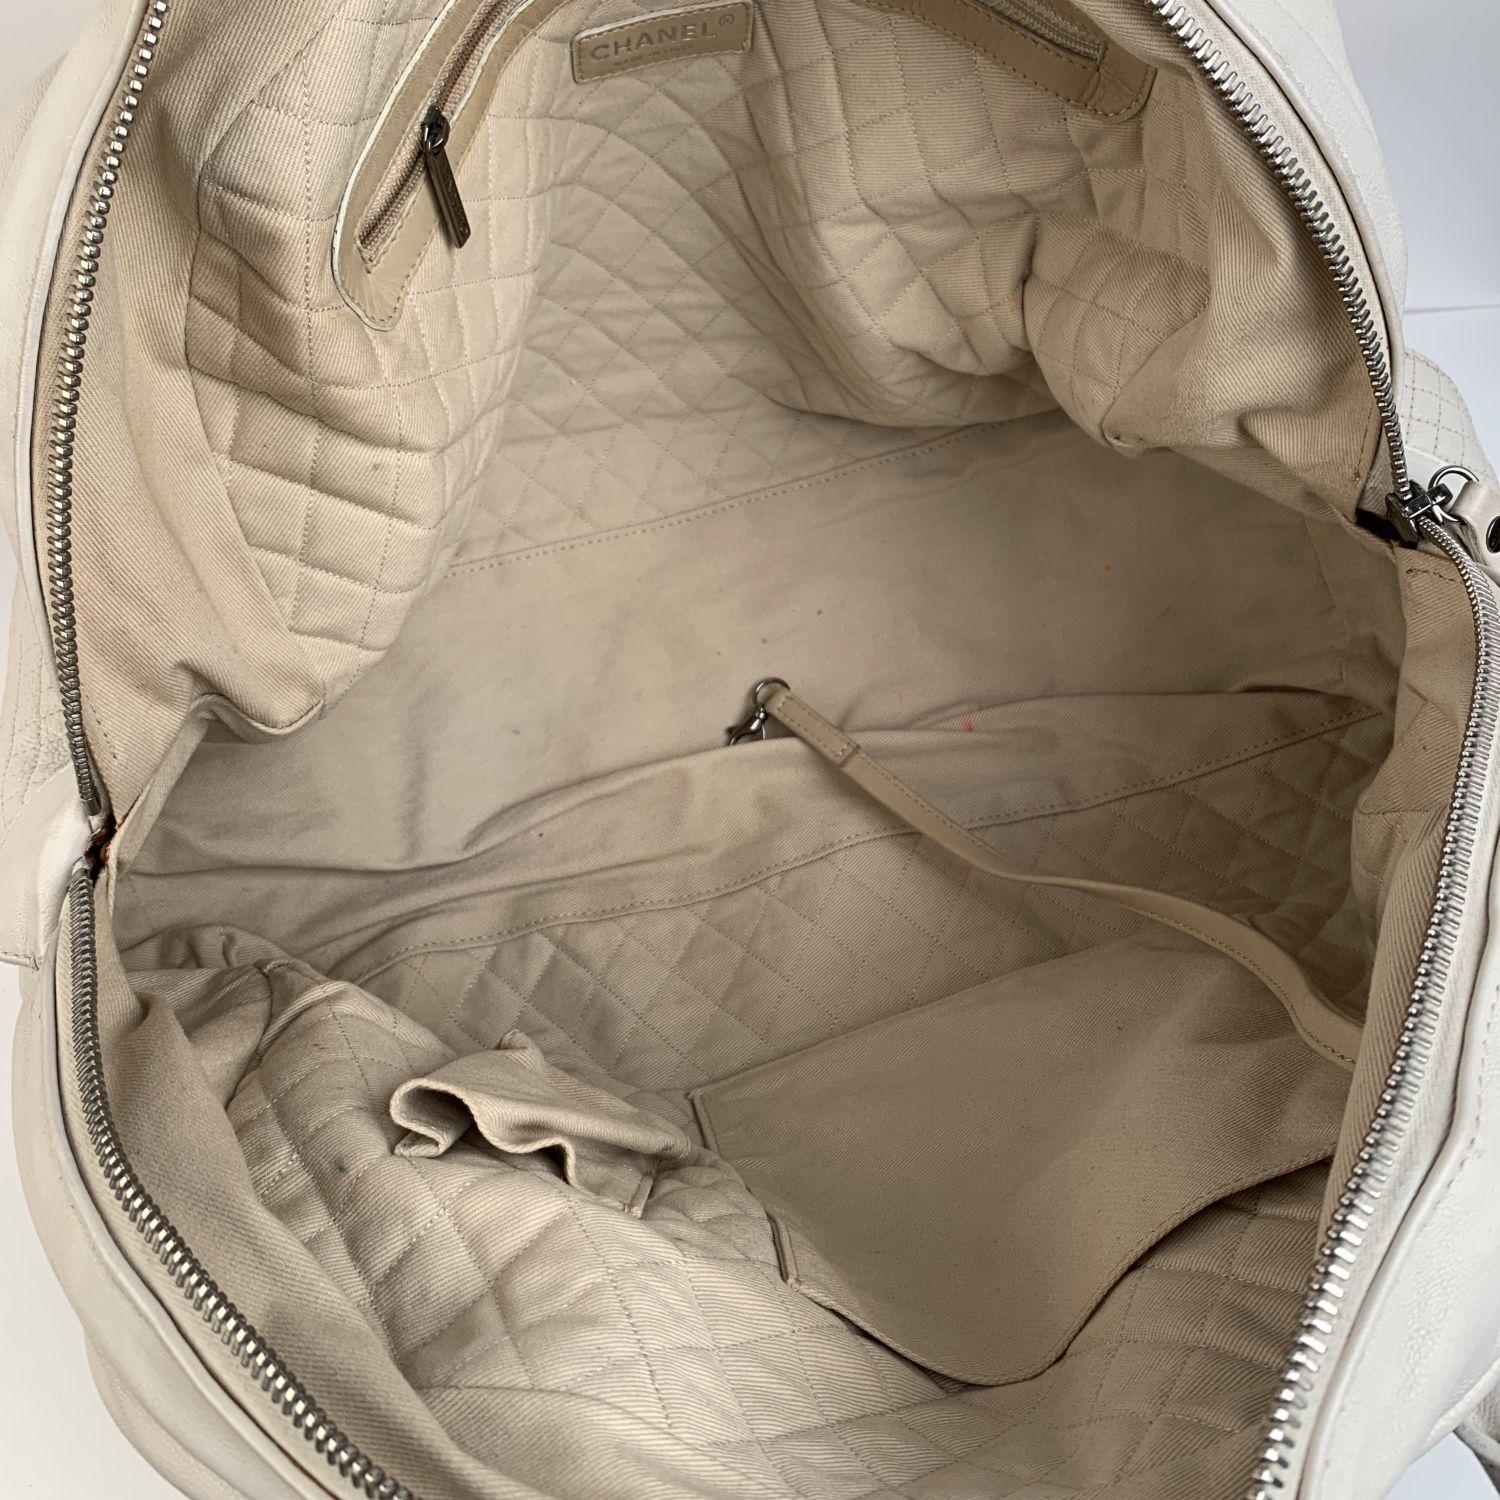 Chanel White Leather CC Logo Bowling Bowler Duffle Bag 2